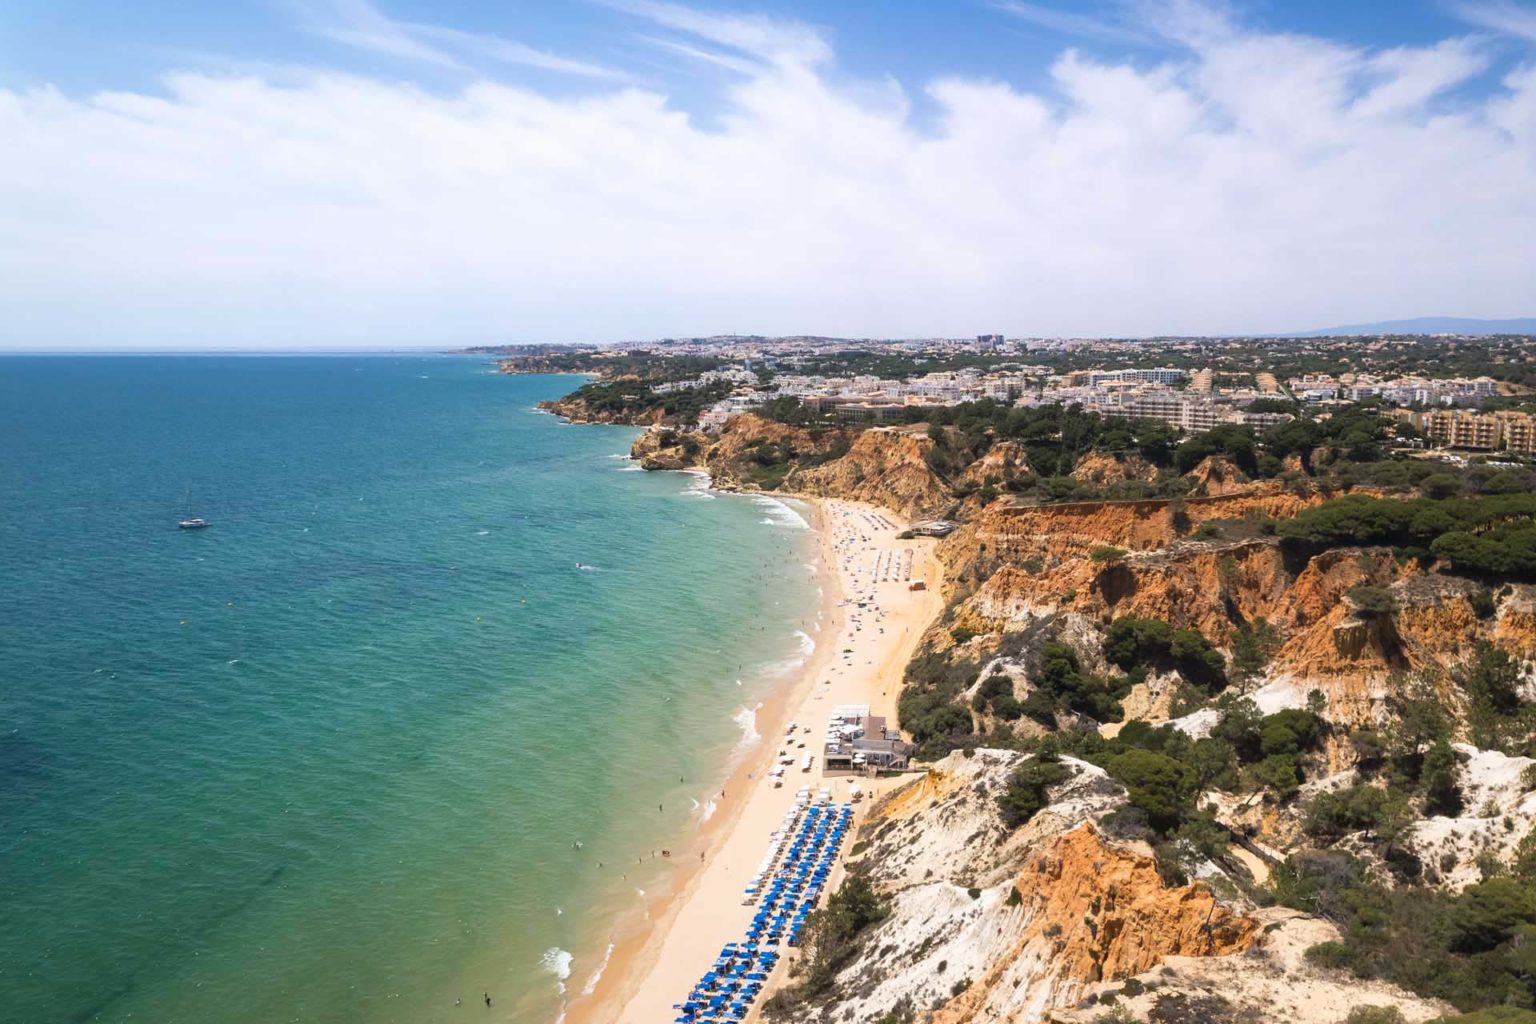 Aerial view of the beach and seaside cliffs of Praia da Falésia beach in Albufeira, Portugal